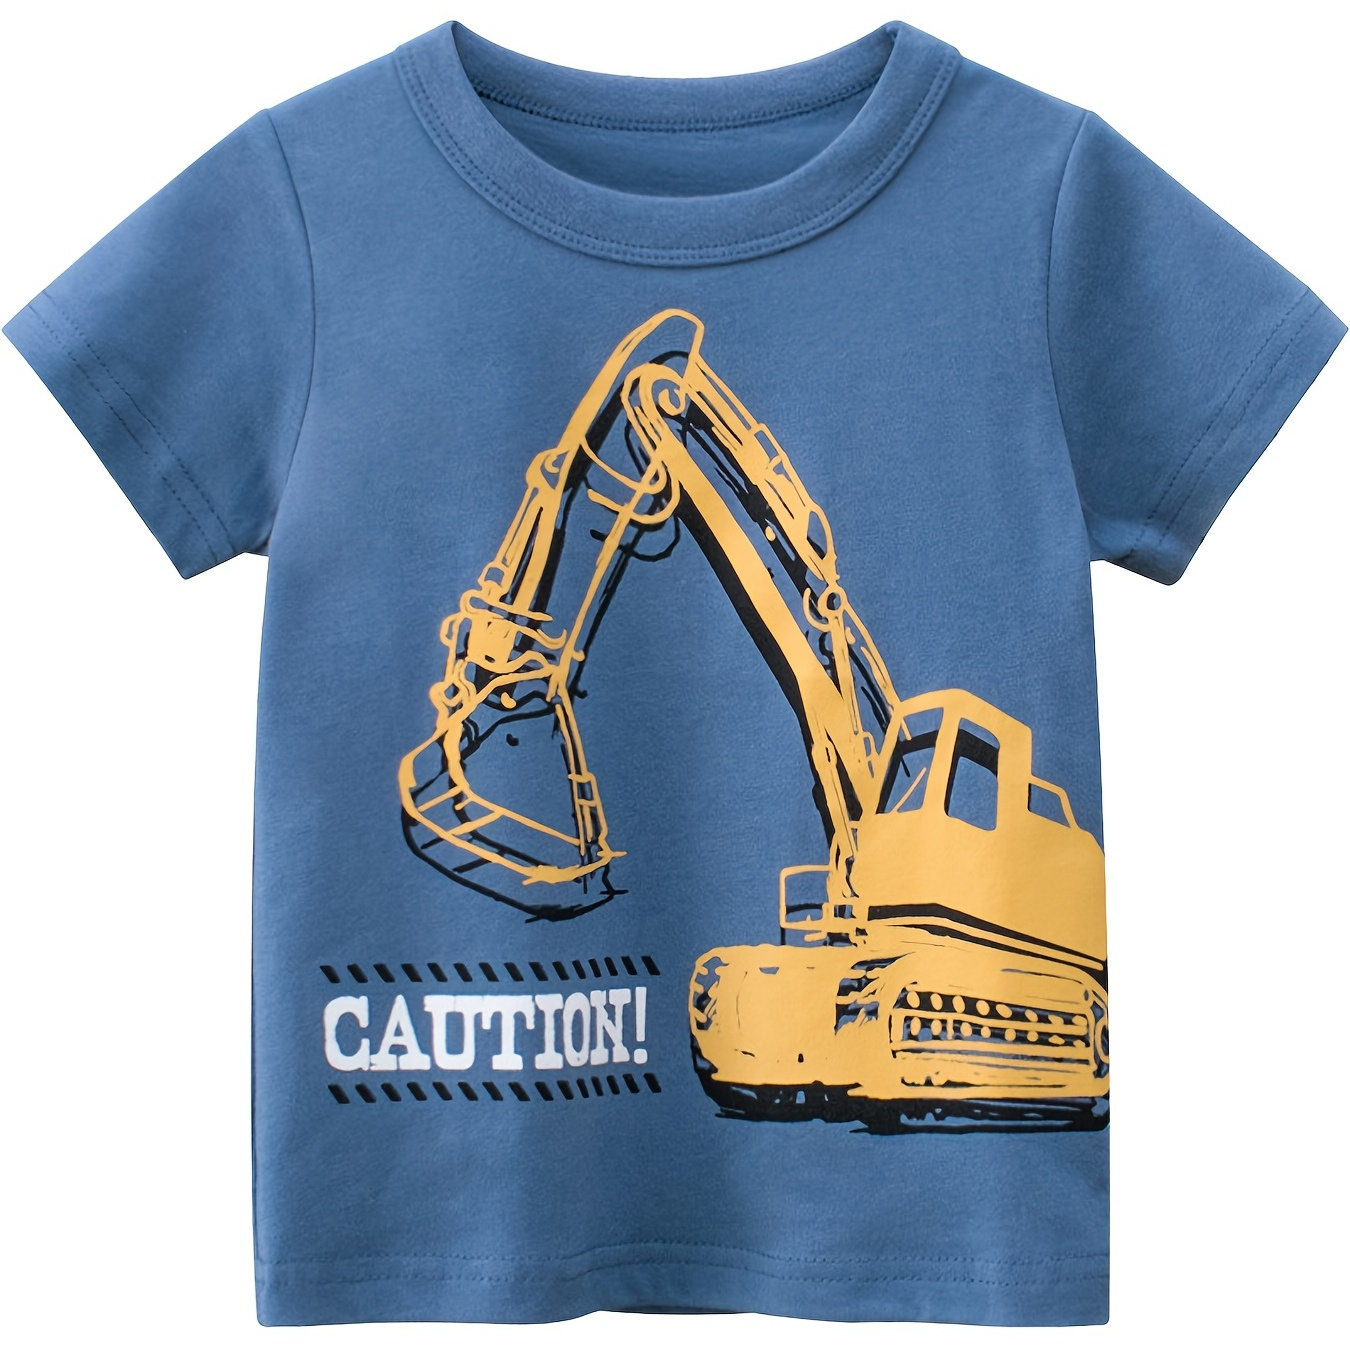 

Boys Cotton Round Neck T-shirt Excavator Print Short Sleeve Tees Top Kids Summer Clothes